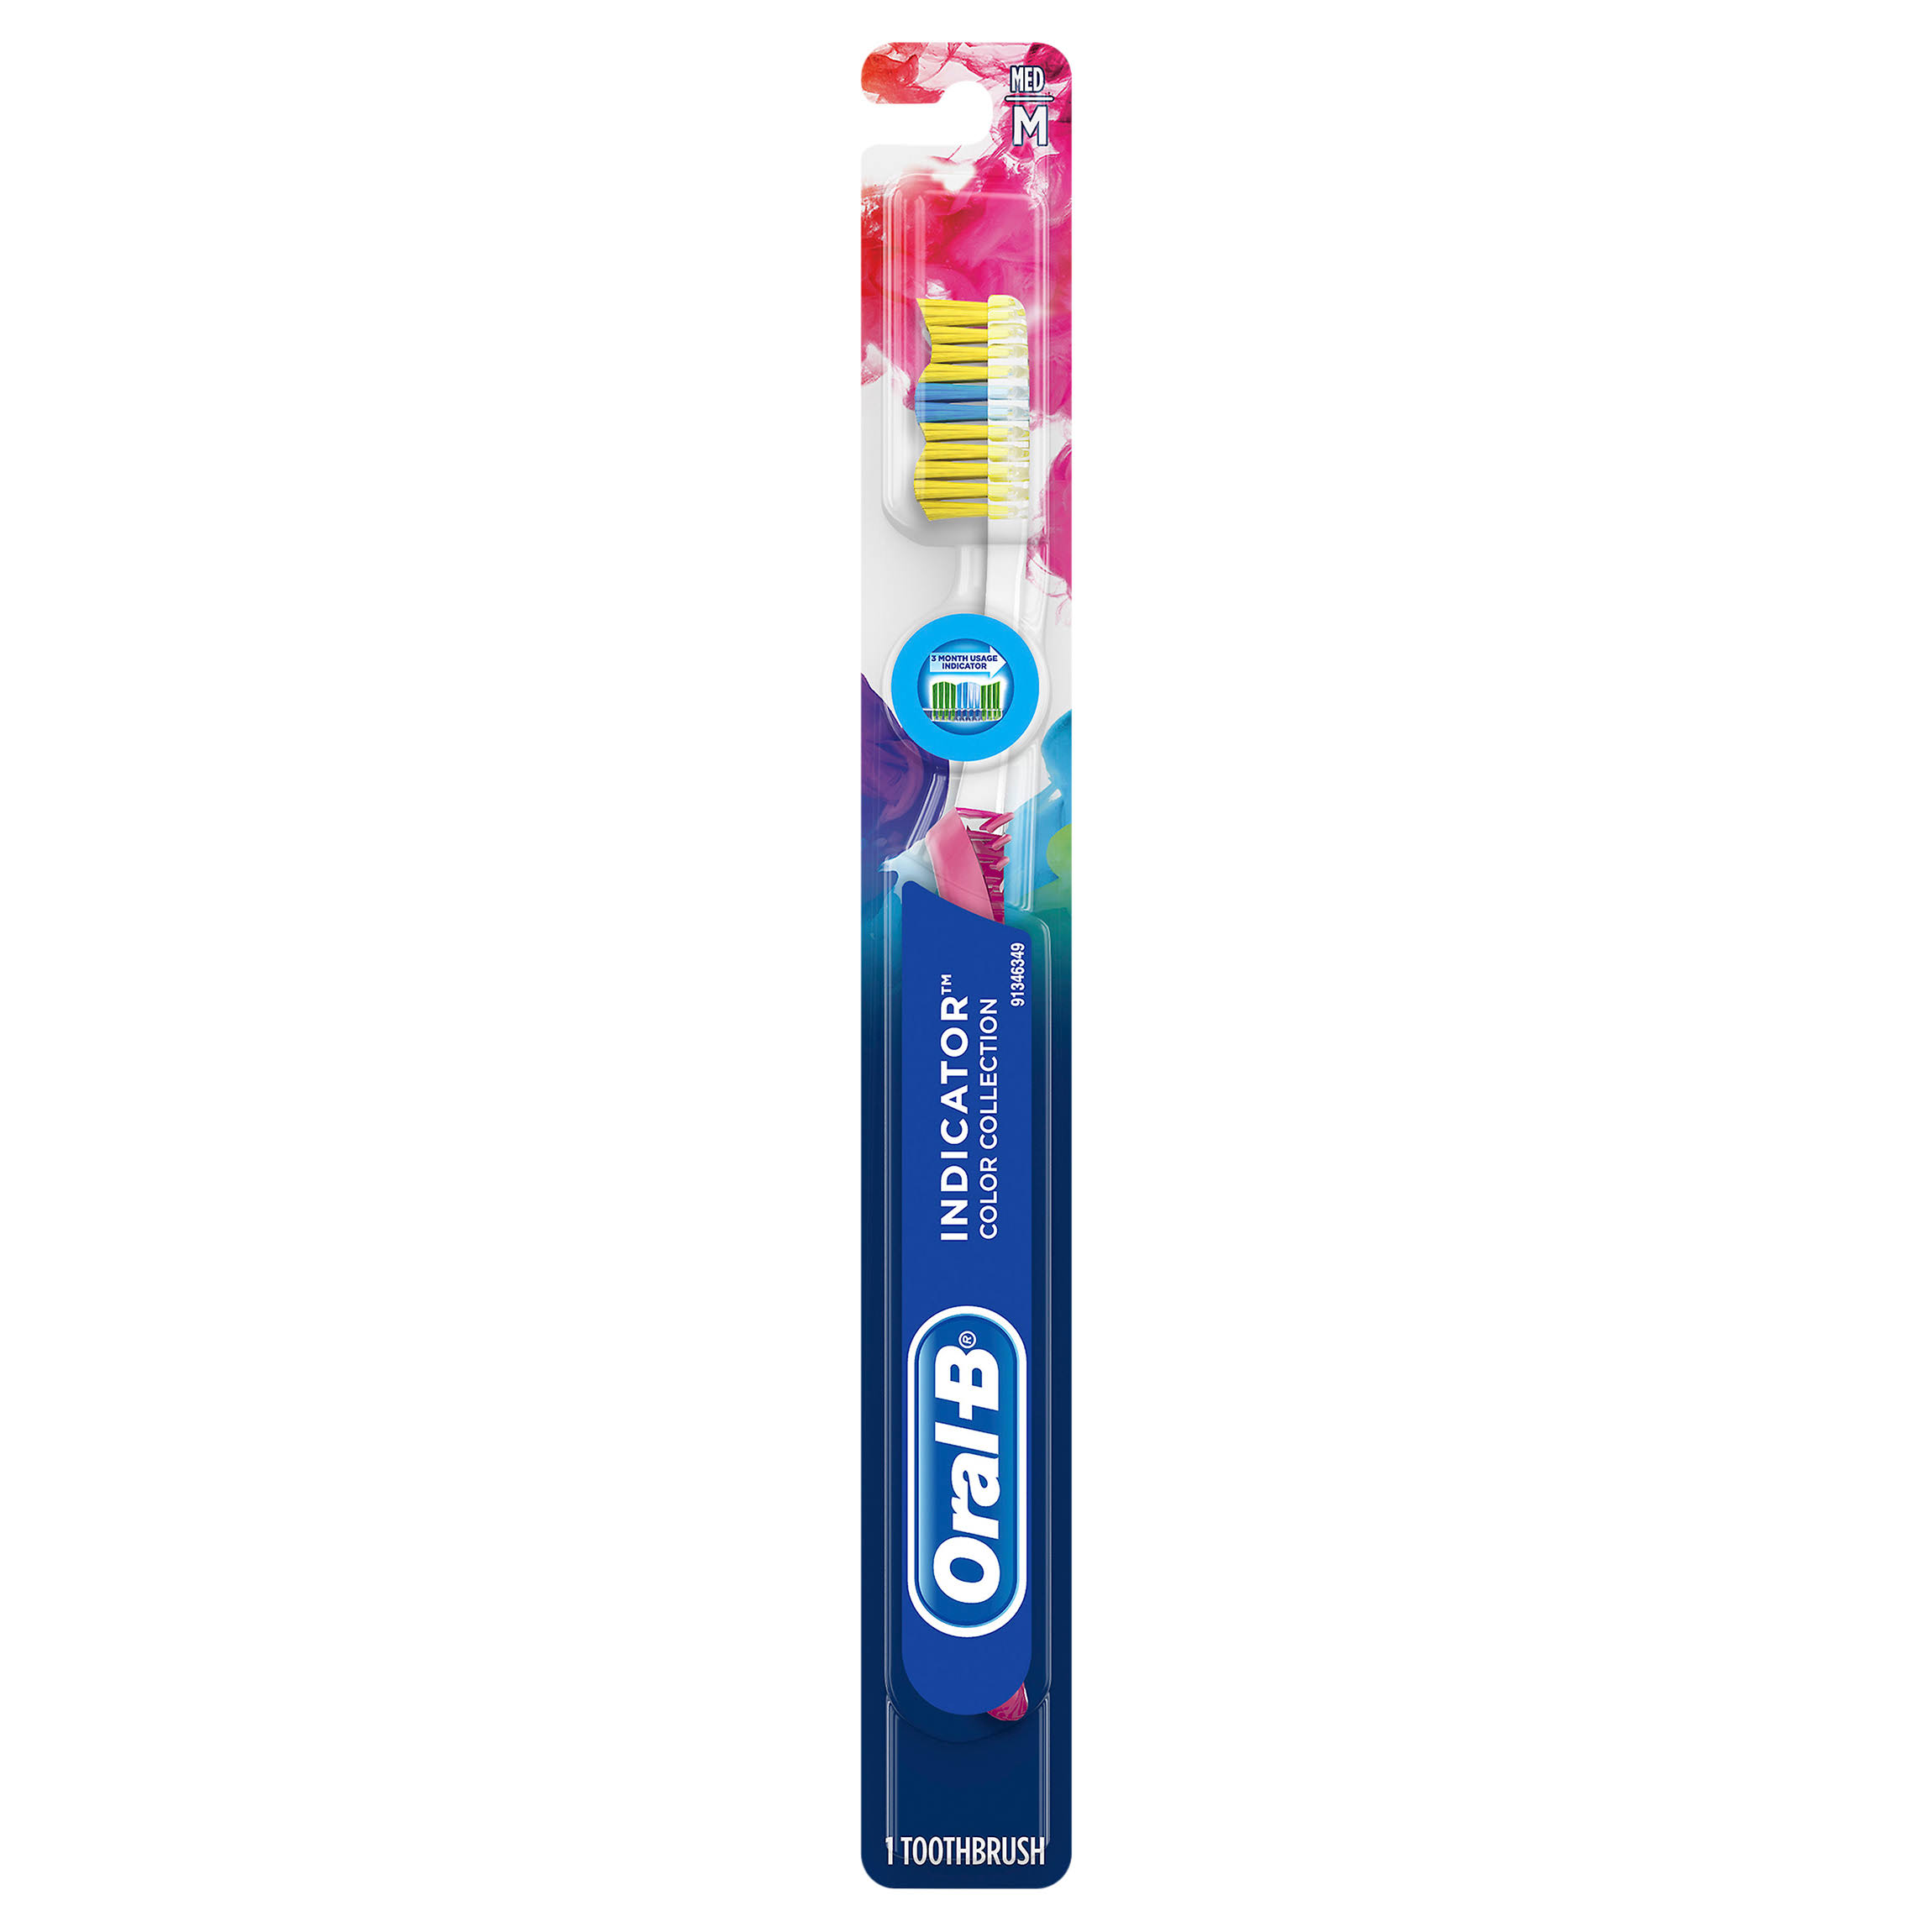 Oral-B Contour Clean Indicator Toothbrush - Medium